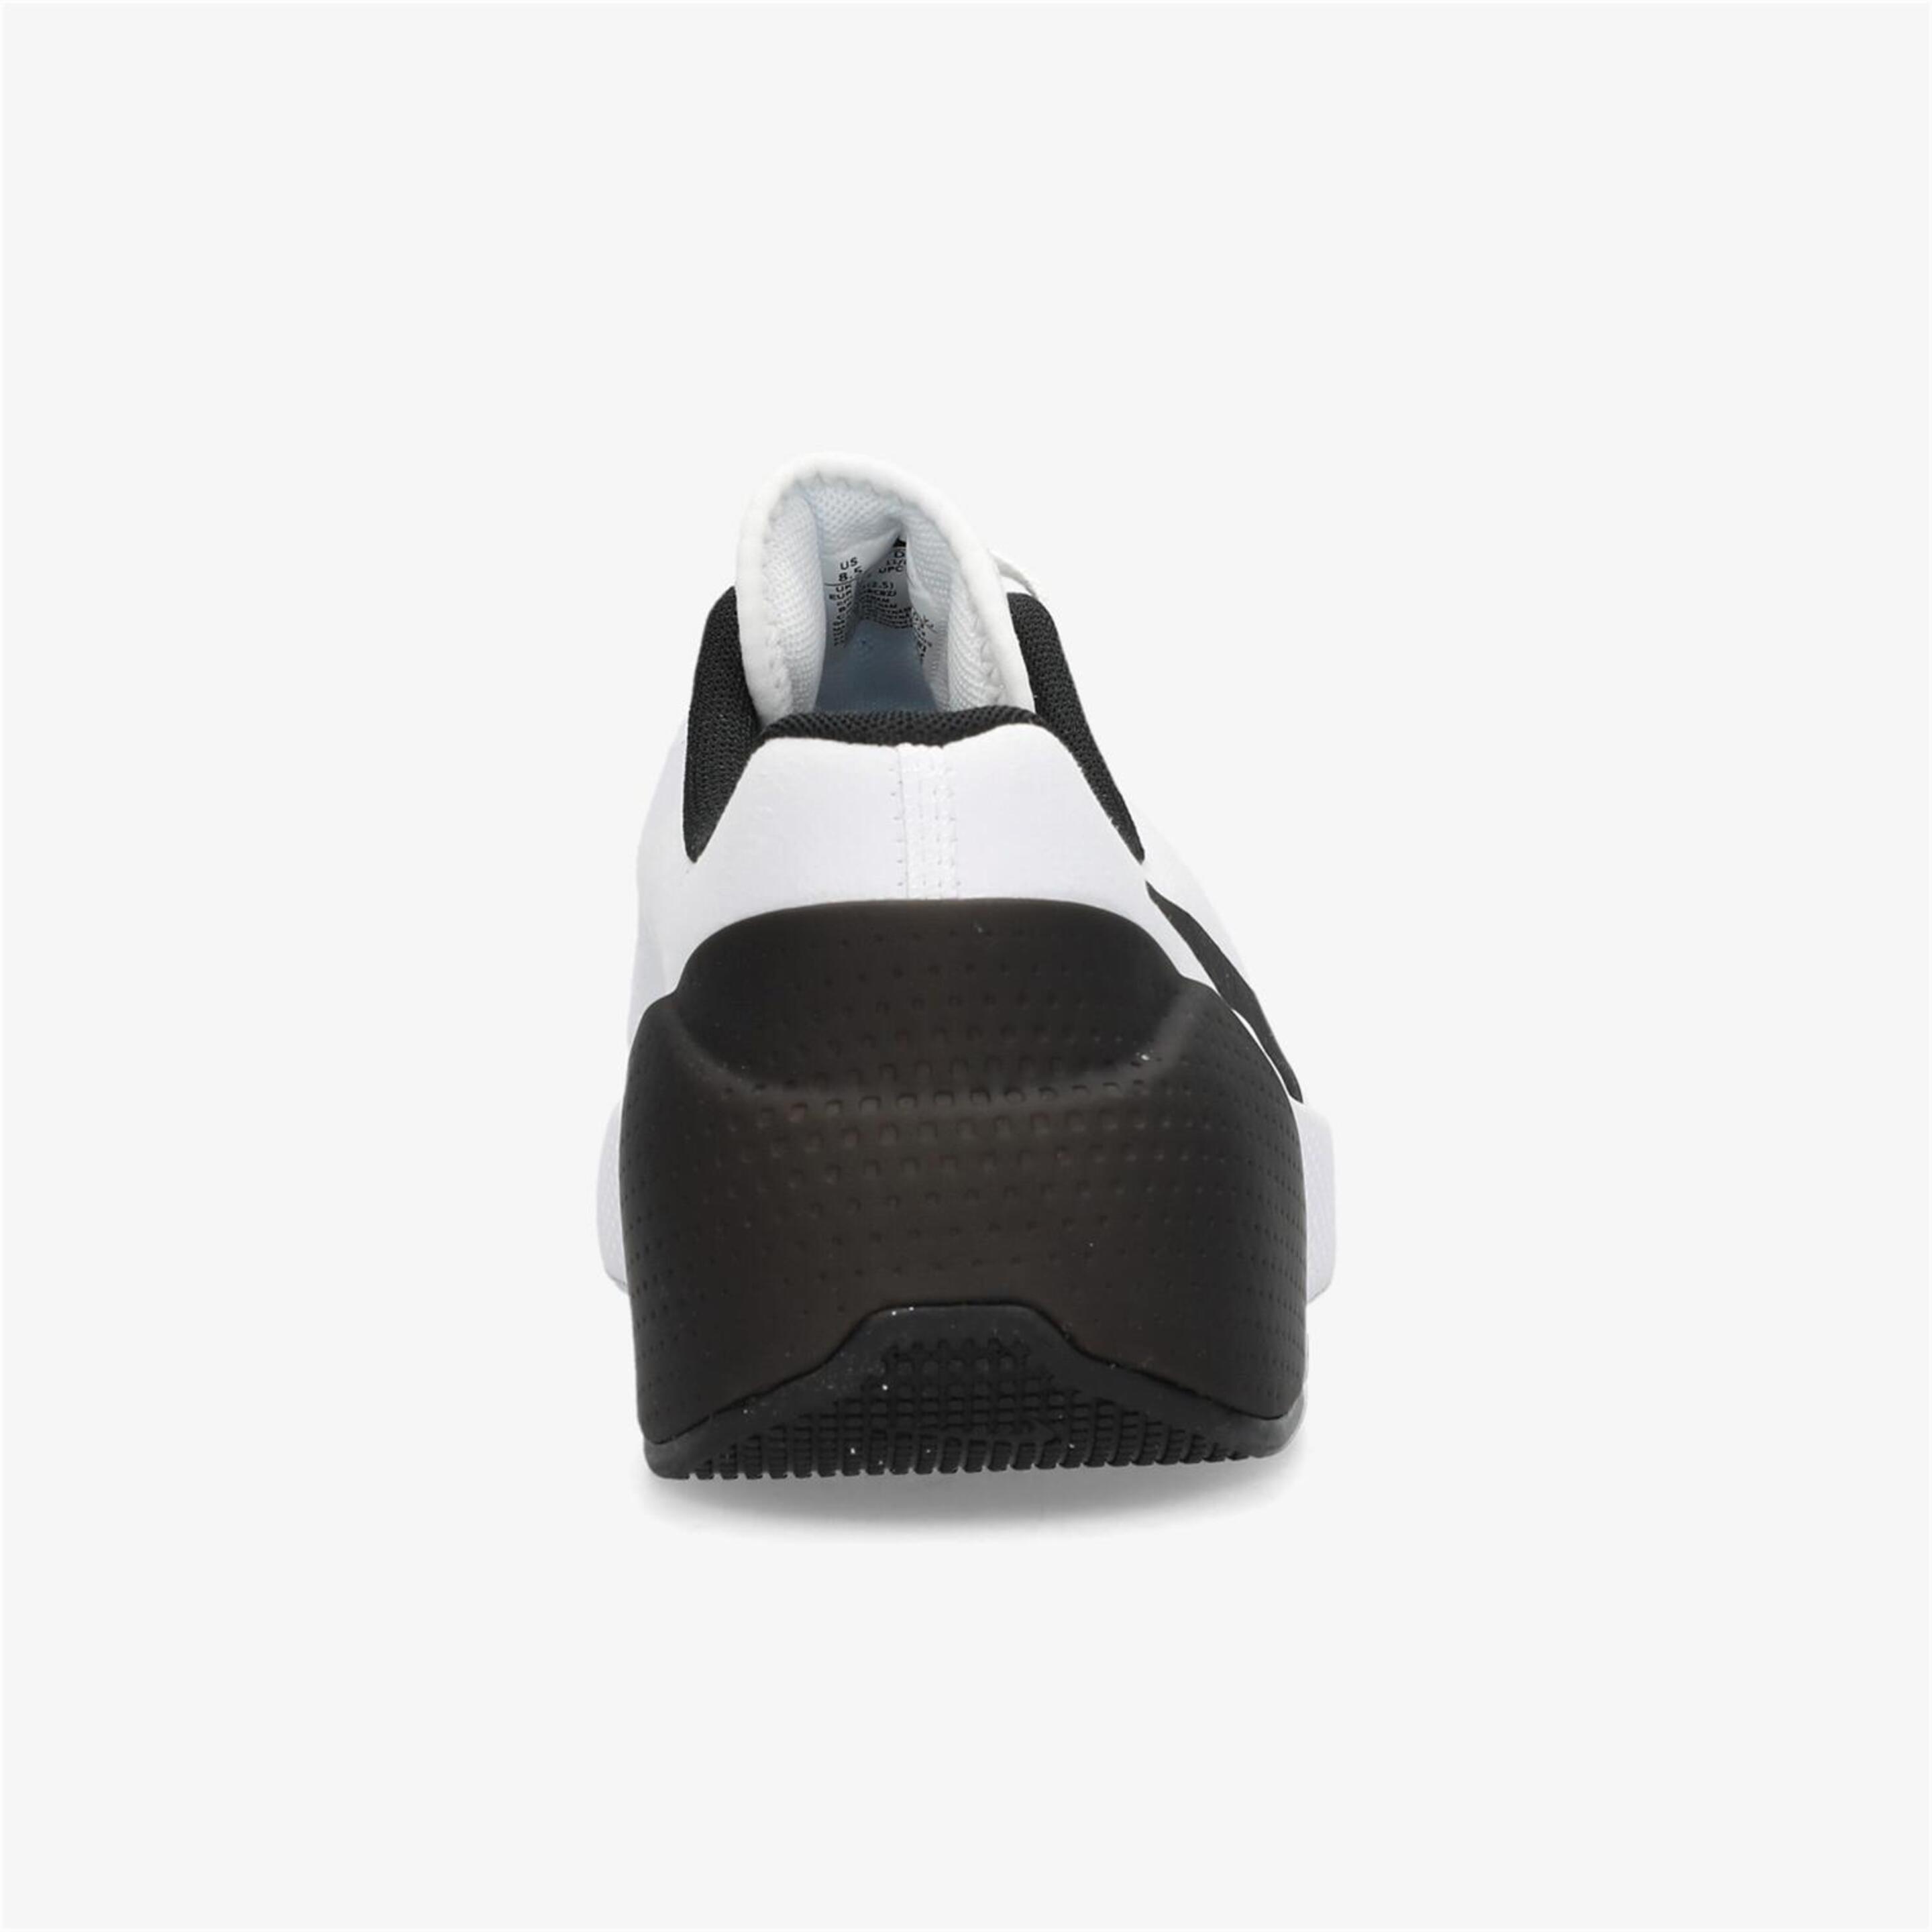 Nike Zoom Tr - Blanco - Zapatillas Fitness Hombre  | Sprinter